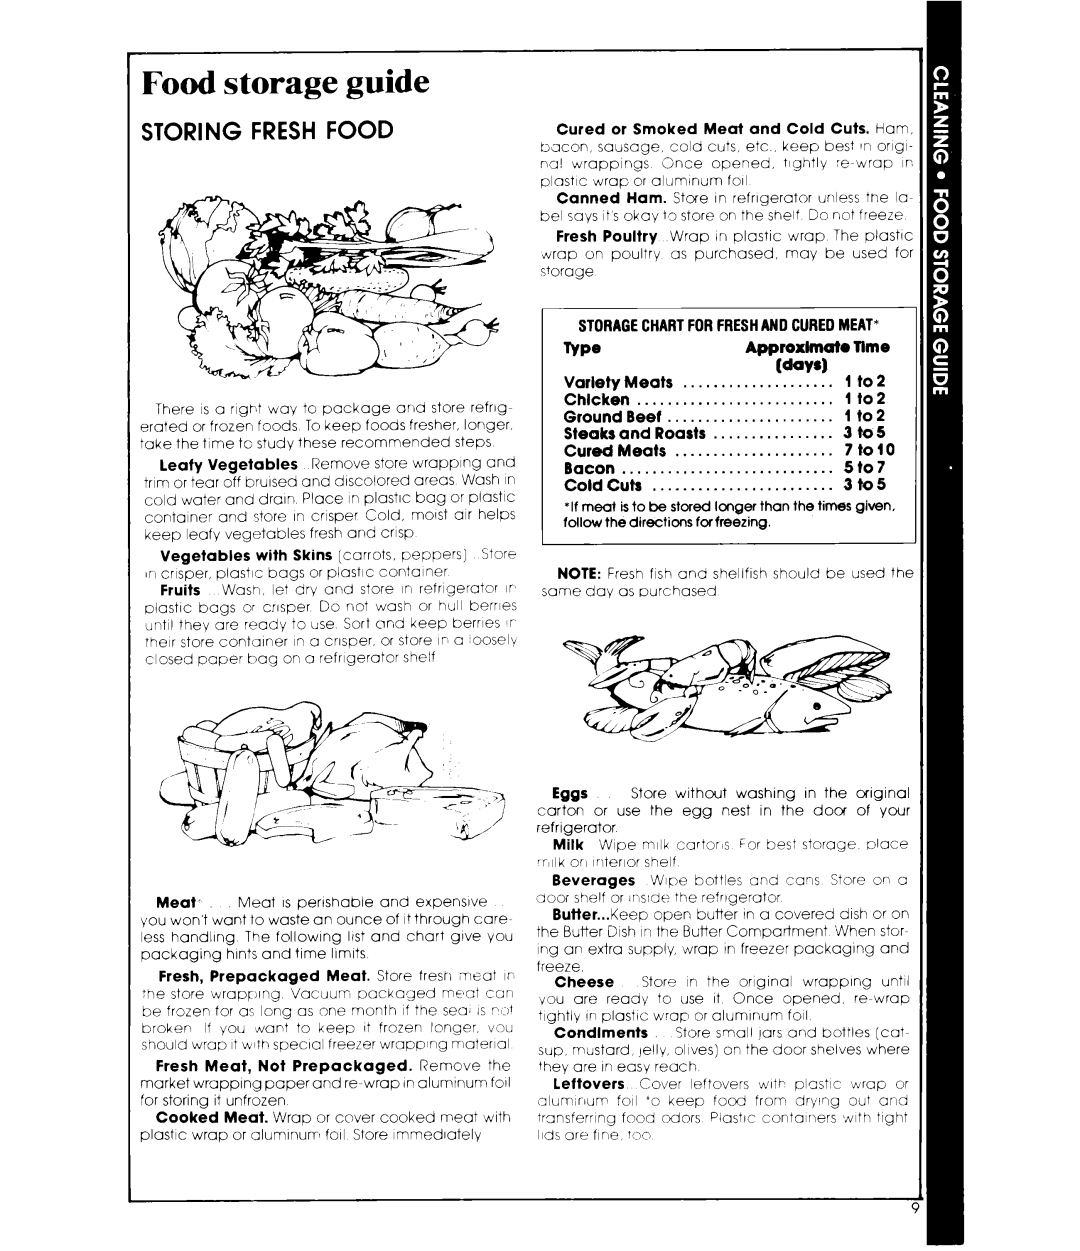 Whirlpool ETIGJM manual Food storage guide, Storing Fresh Food, WYSl, Approxtmatolime 